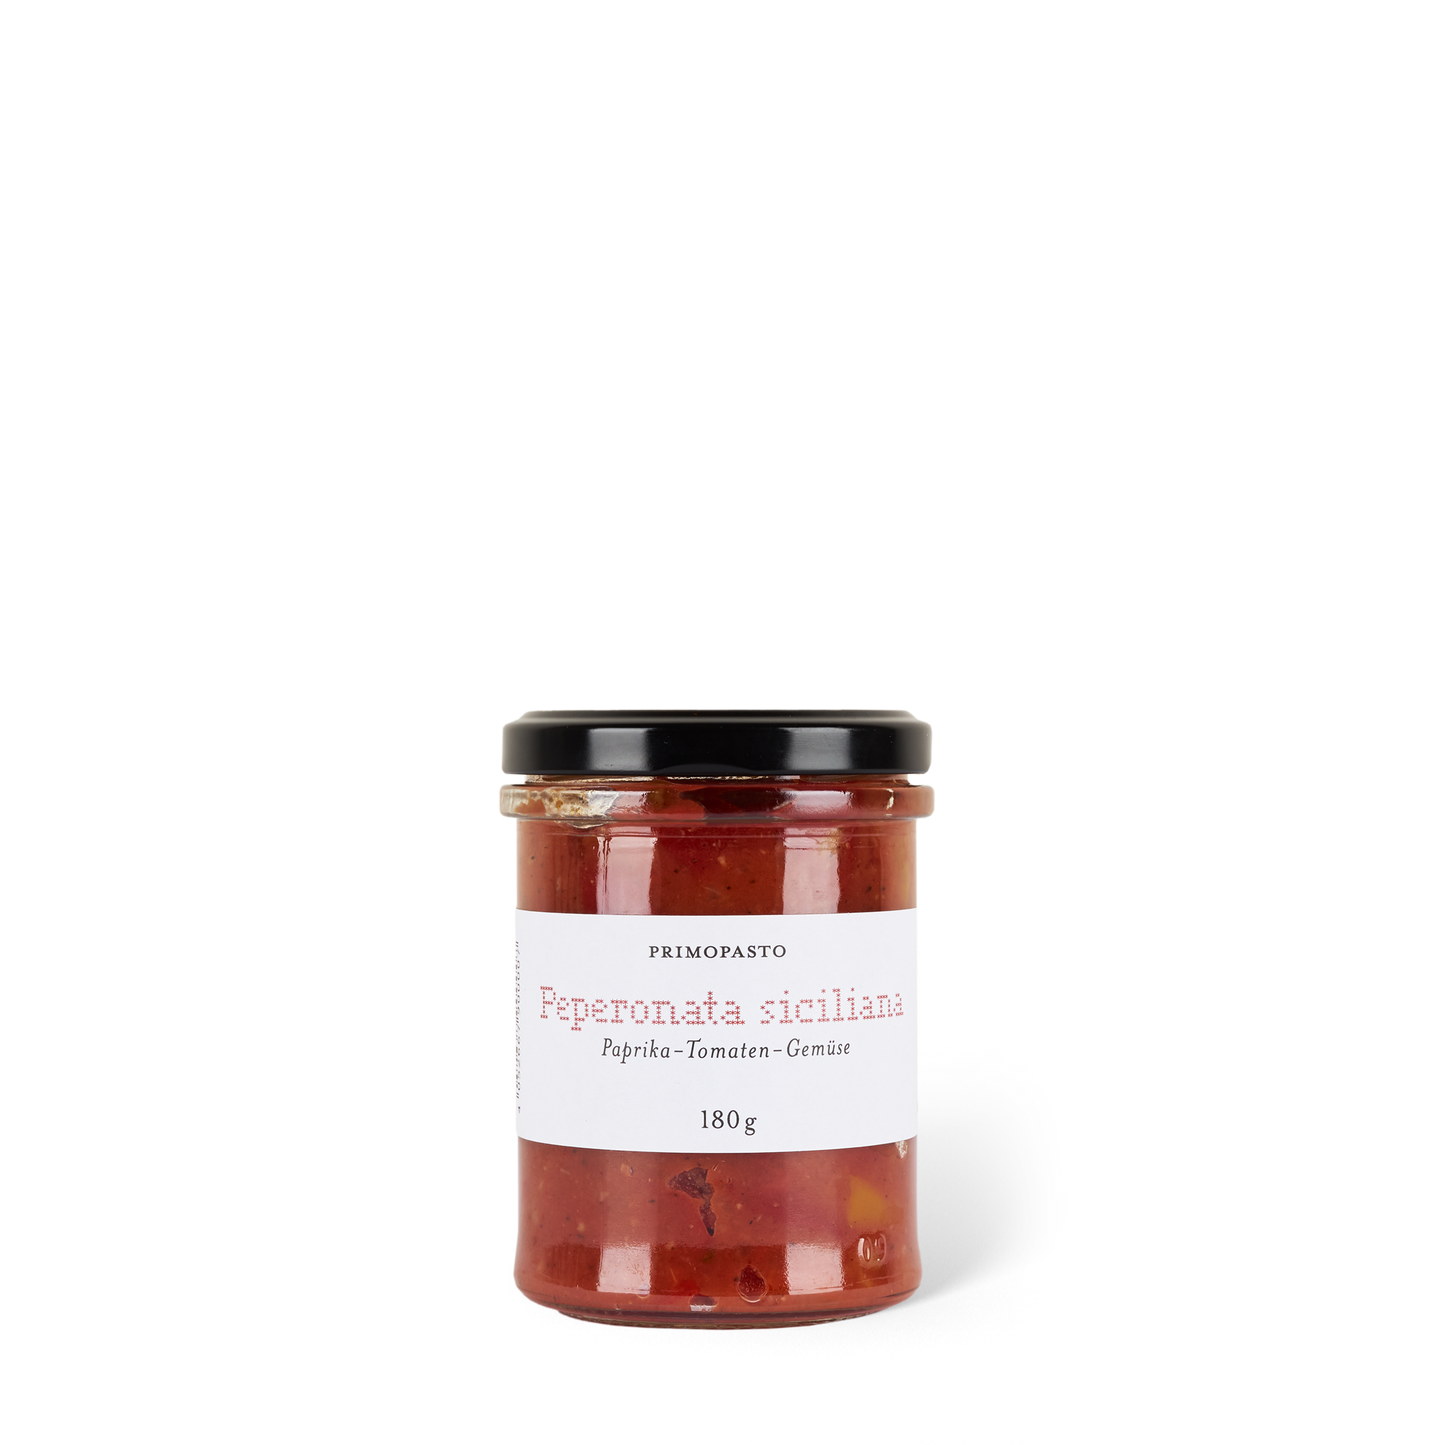 Peperonata siciliana - Primopasto - Tomatencreme eingelegten Paprikastücke